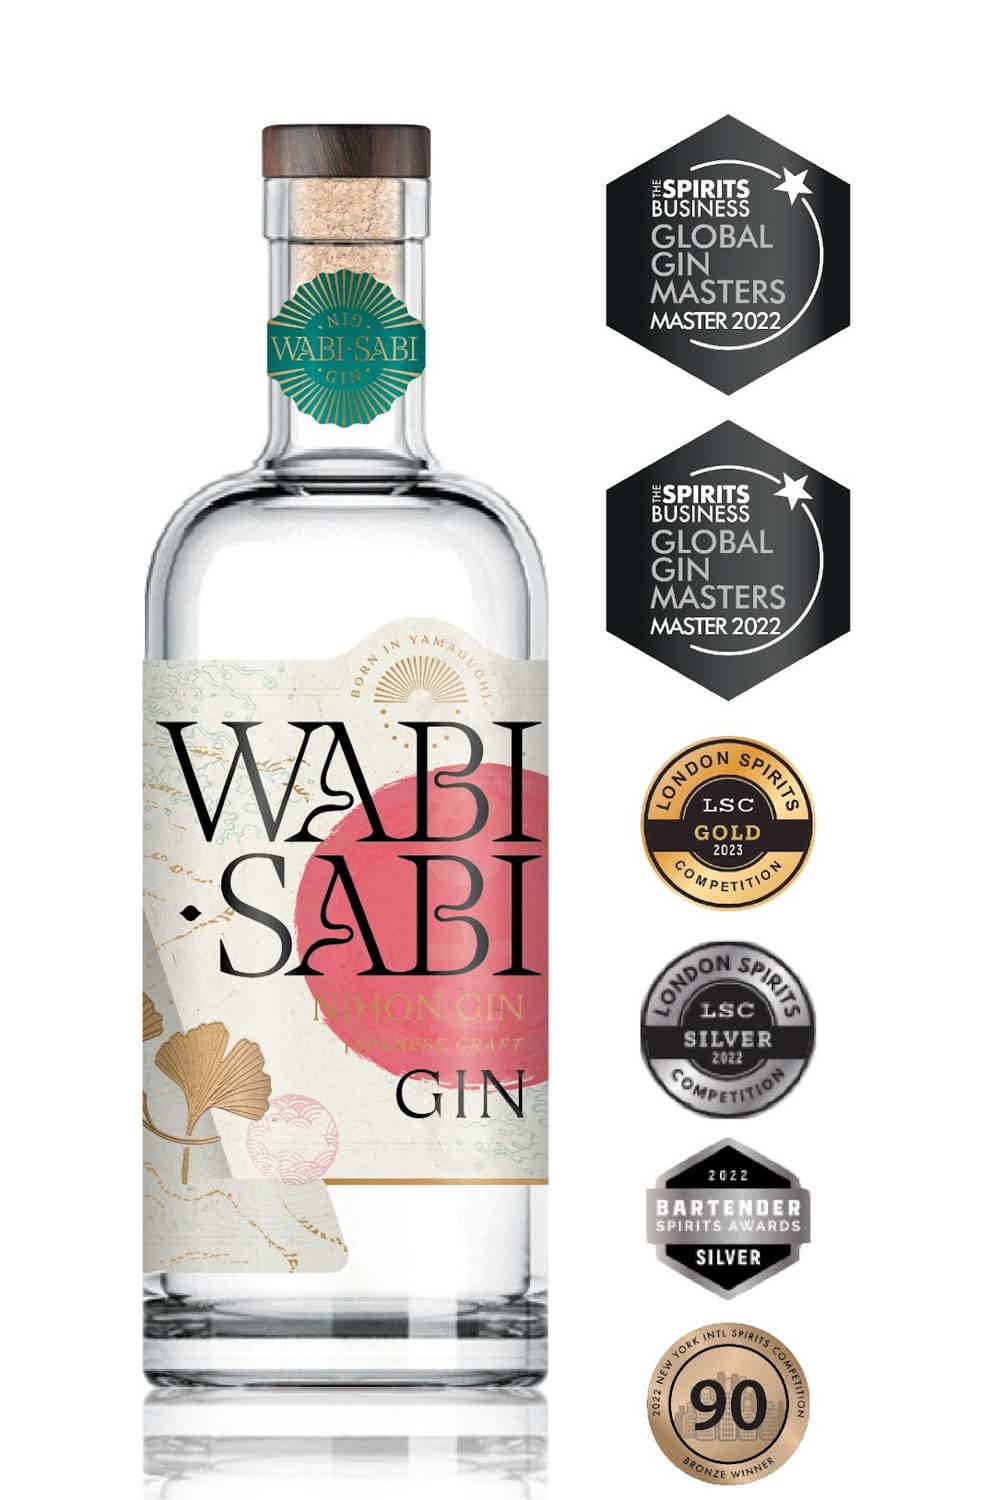 Wabi Sabi Gin 43.0% 0.7L, Spirits